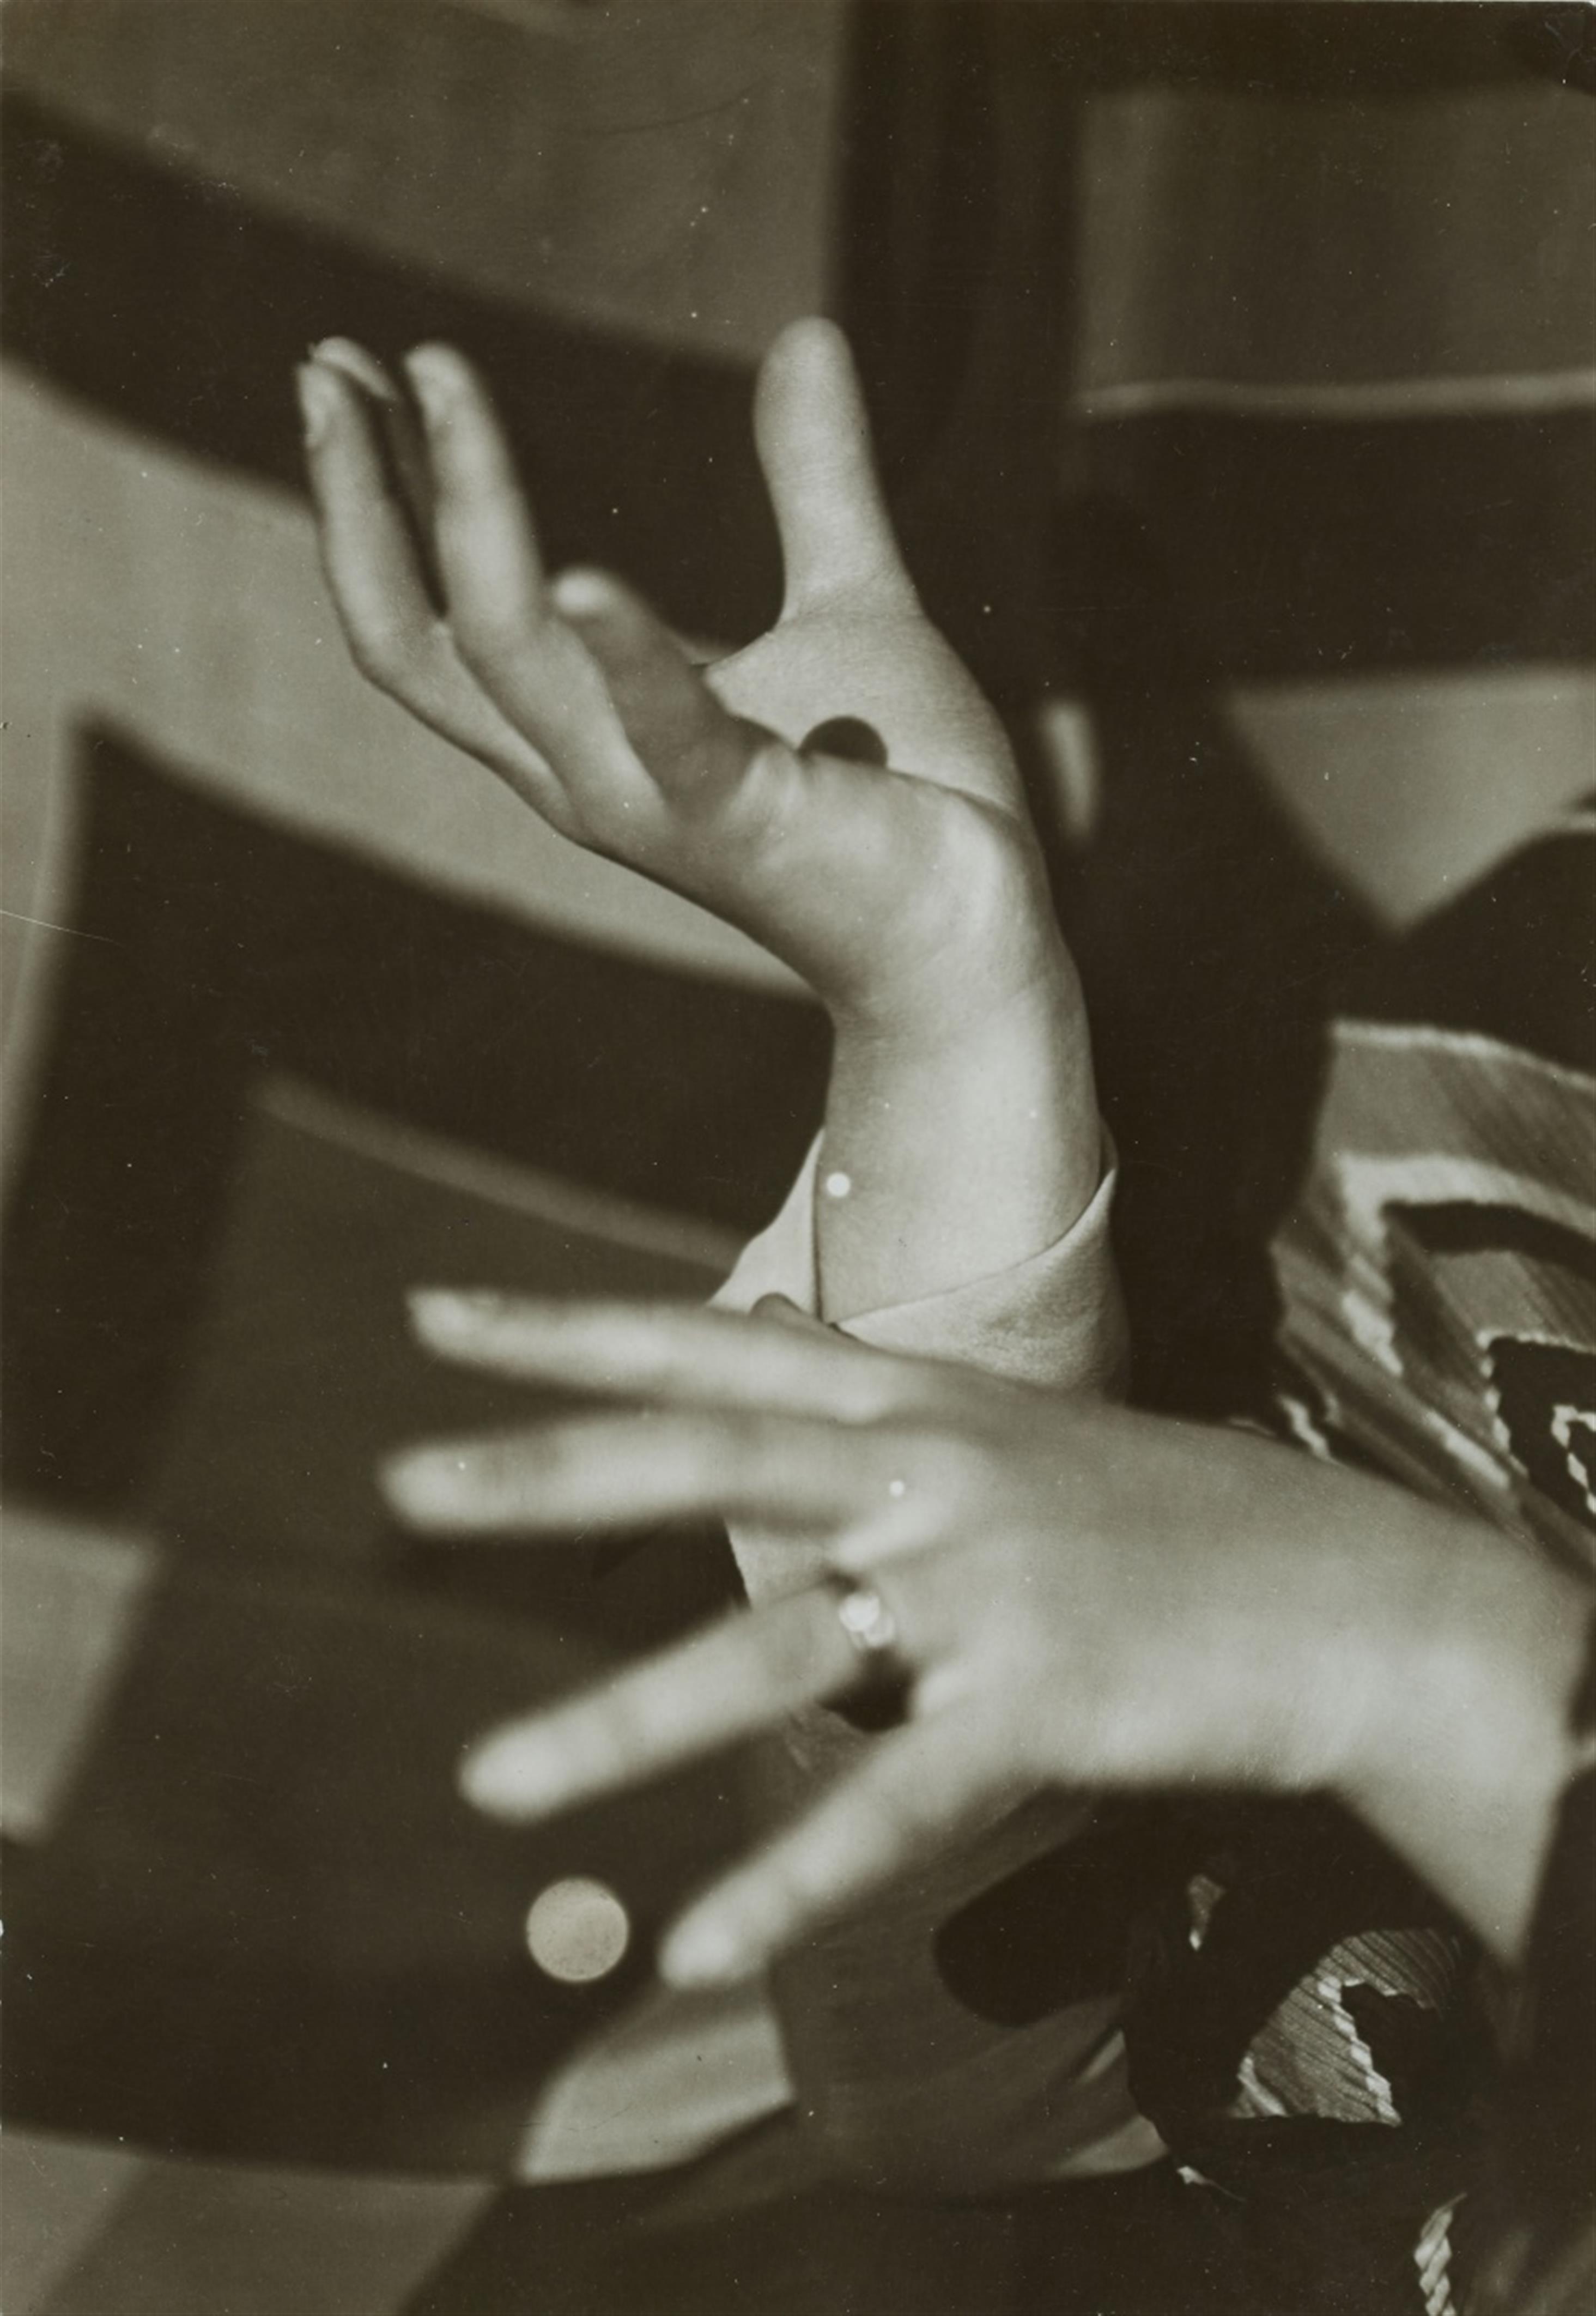 Germaine Krull - Hände der Malerin Sonja Delaunay [Hands of the painter Sonja Delaunay] - image-1